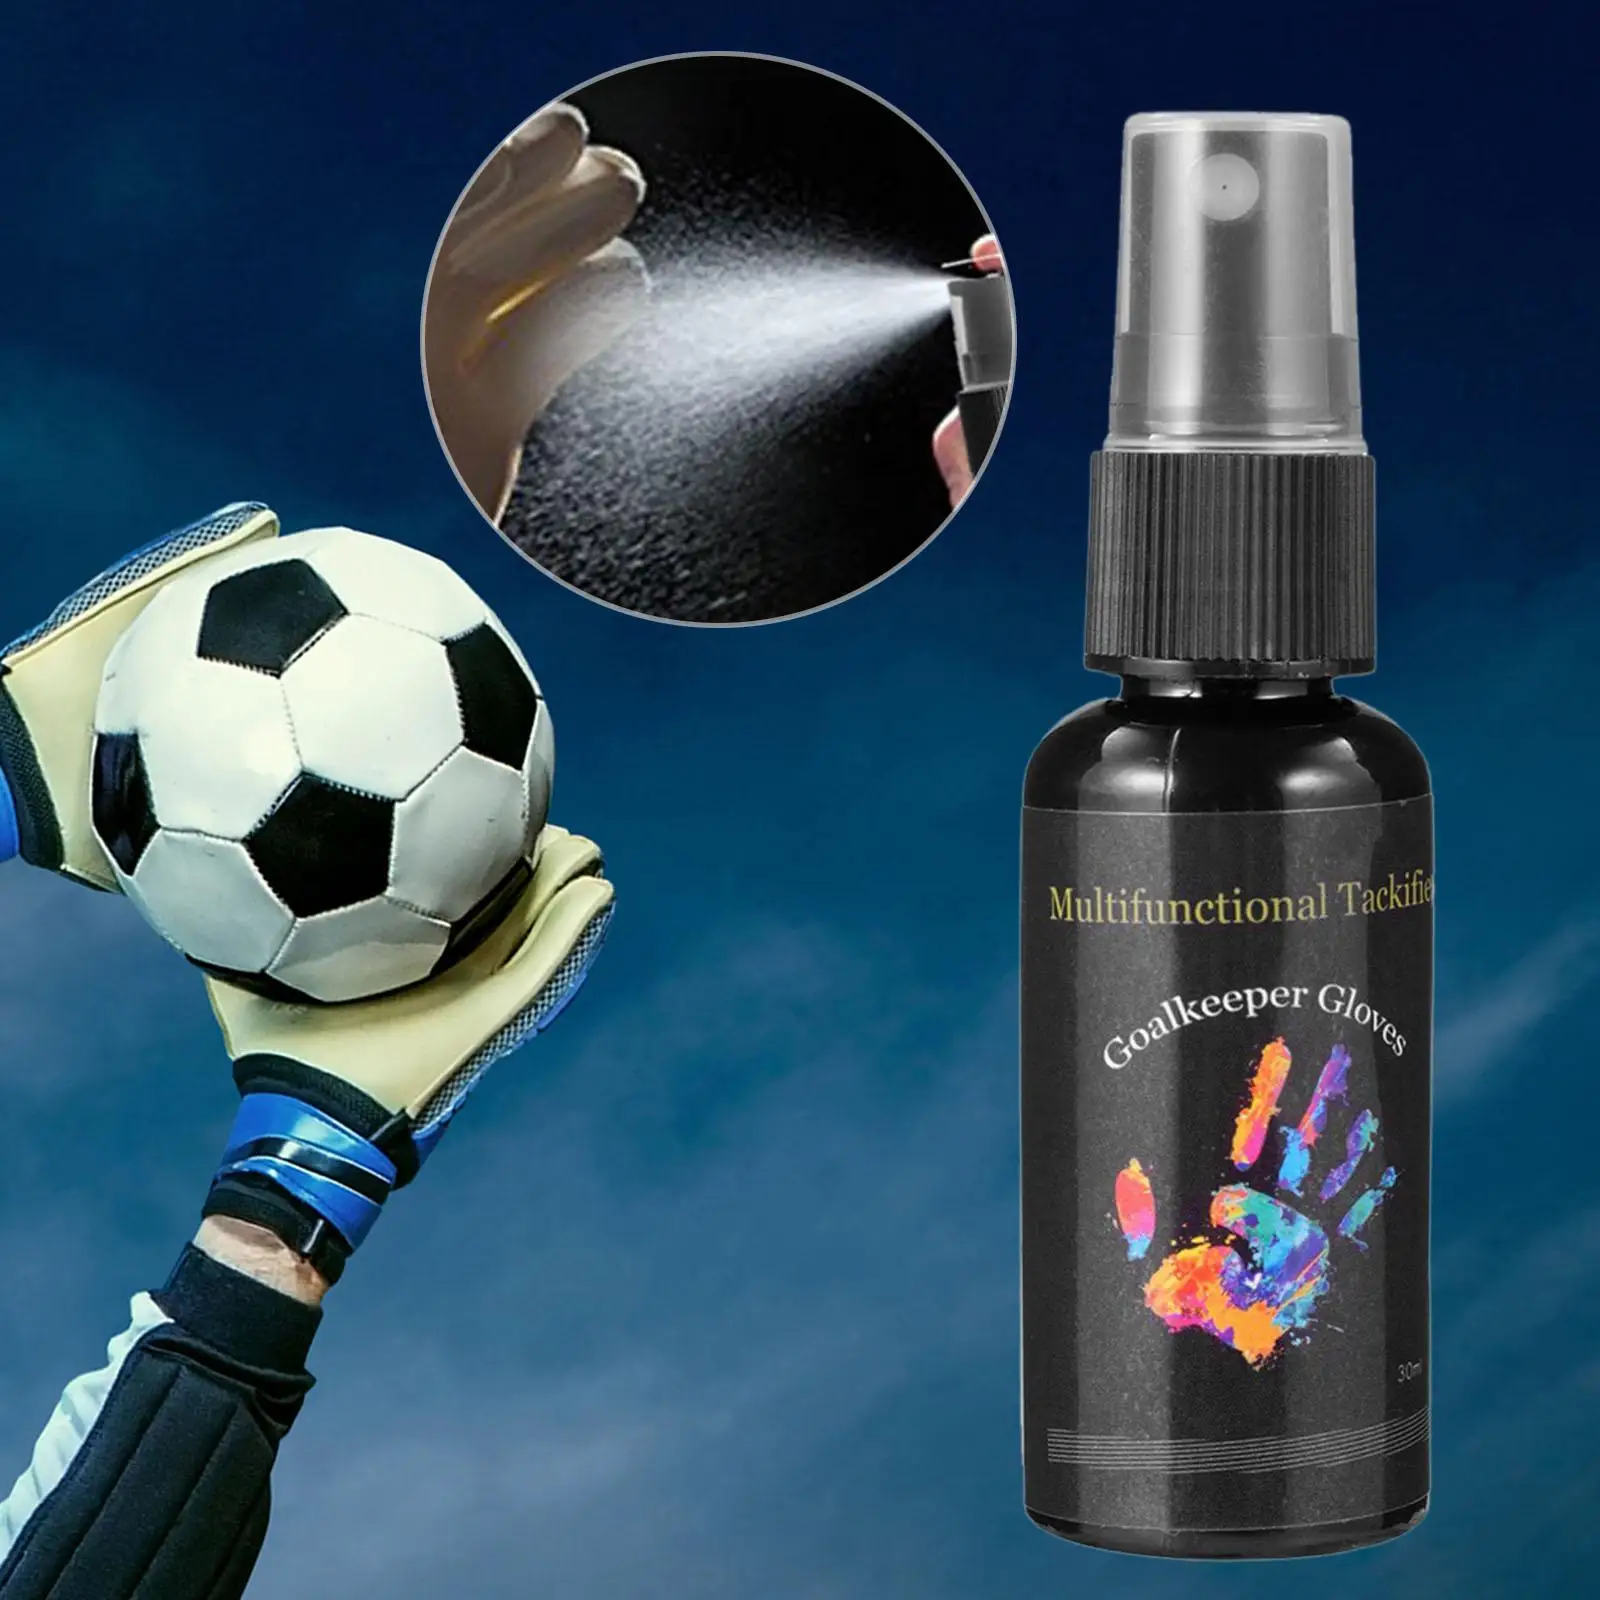 Football Grip Spray Gear Firm Grip Basketball Hand Grip Spray Accessories